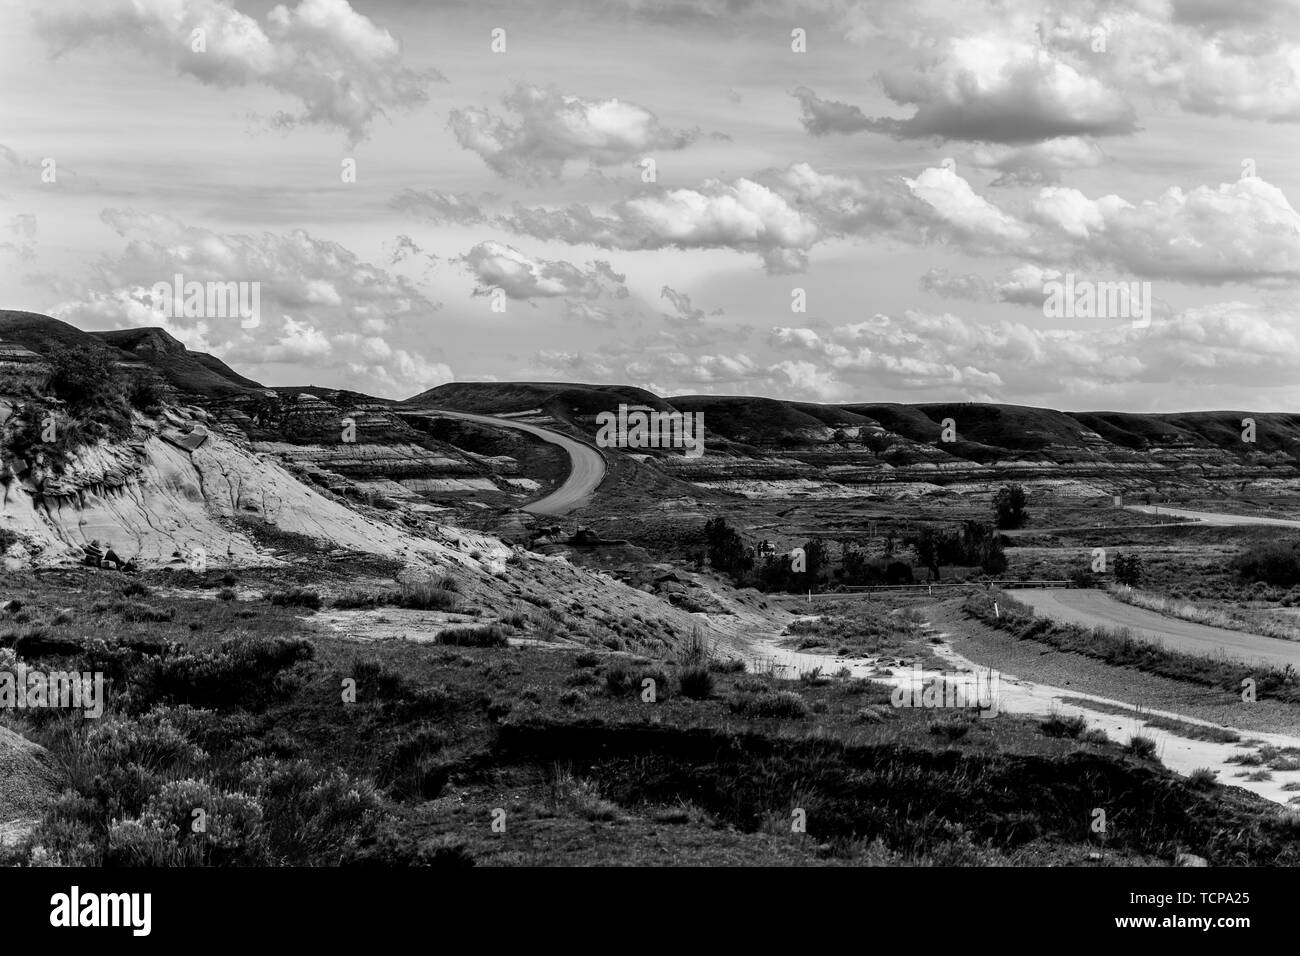 The badlands aroun Drumheller, Alberta in Canada Stock Photo